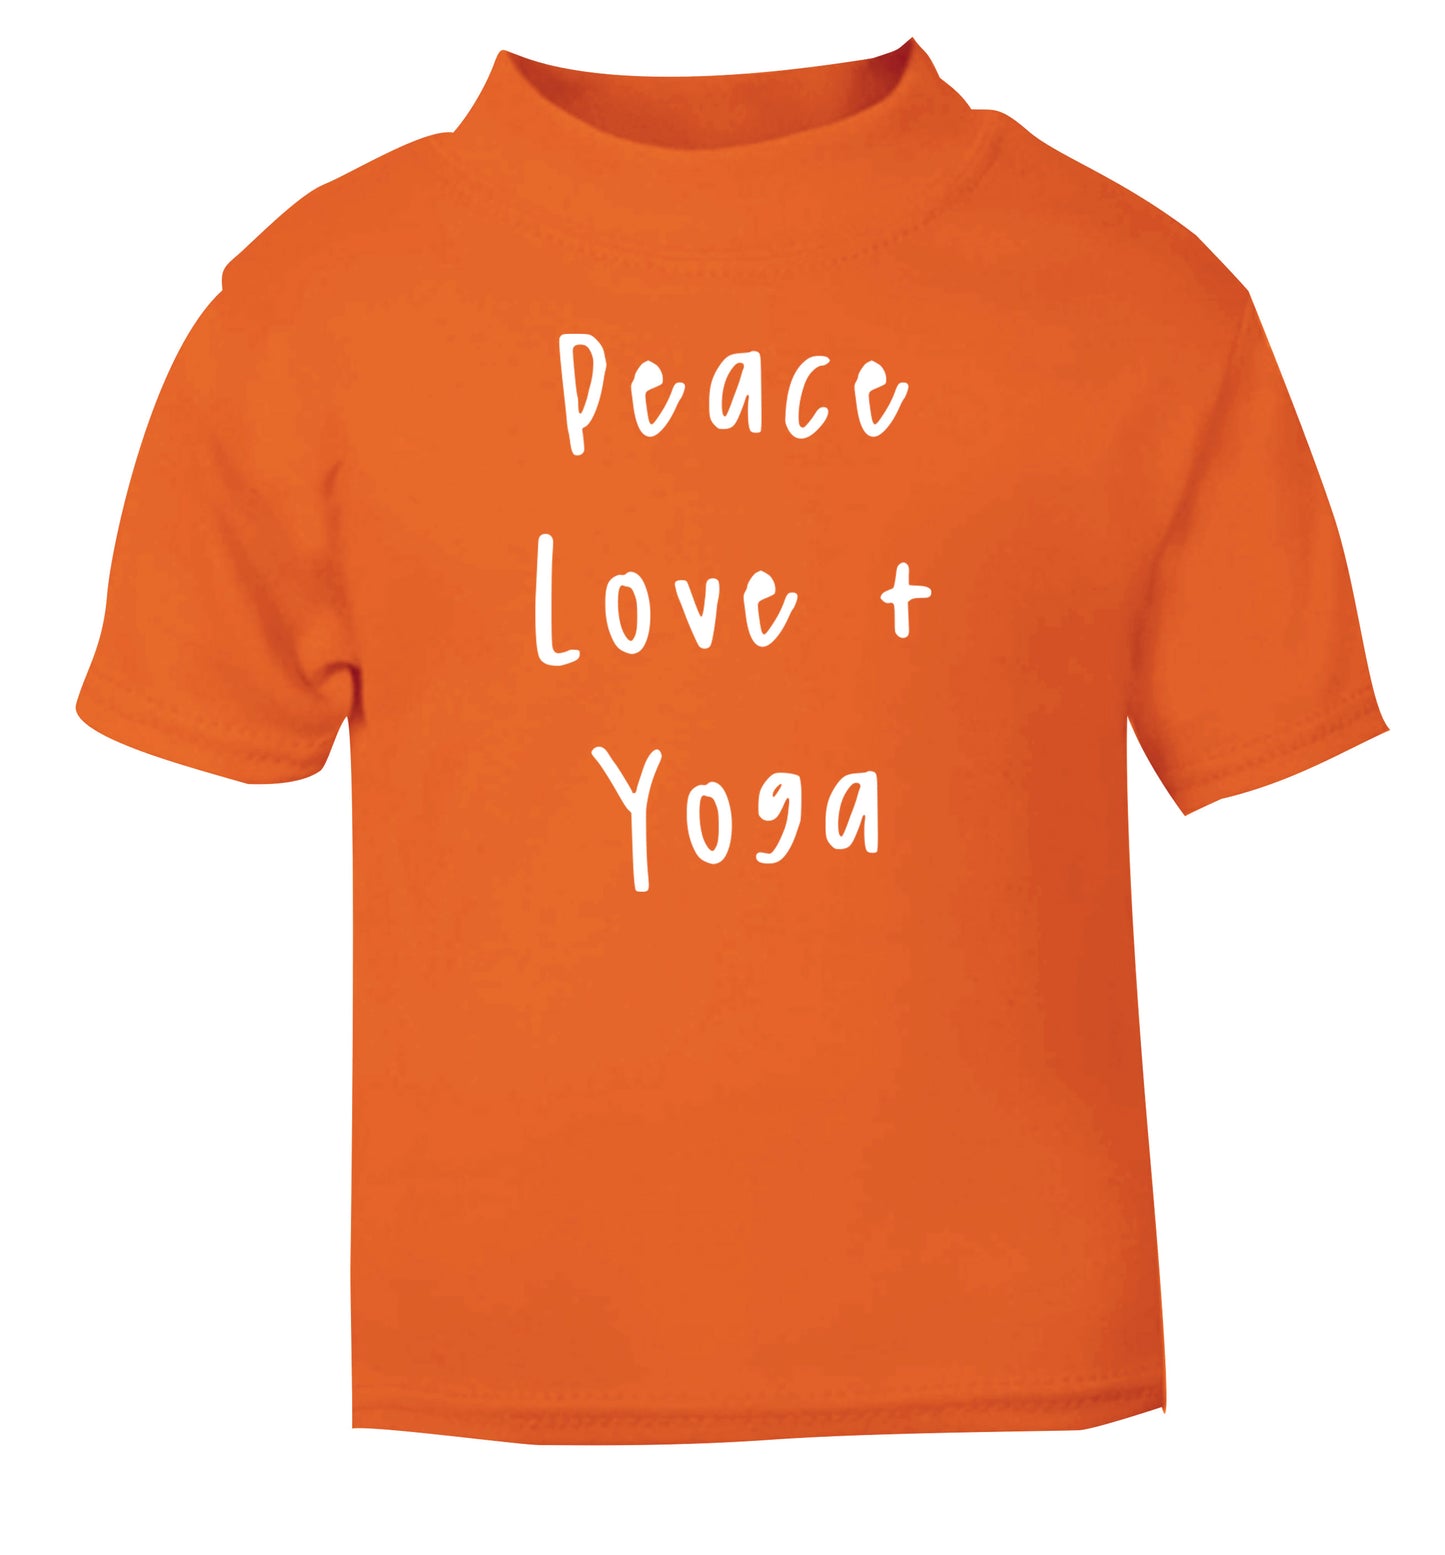 Peace love and yoga orange Baby Toddler Tshirt 2 Years